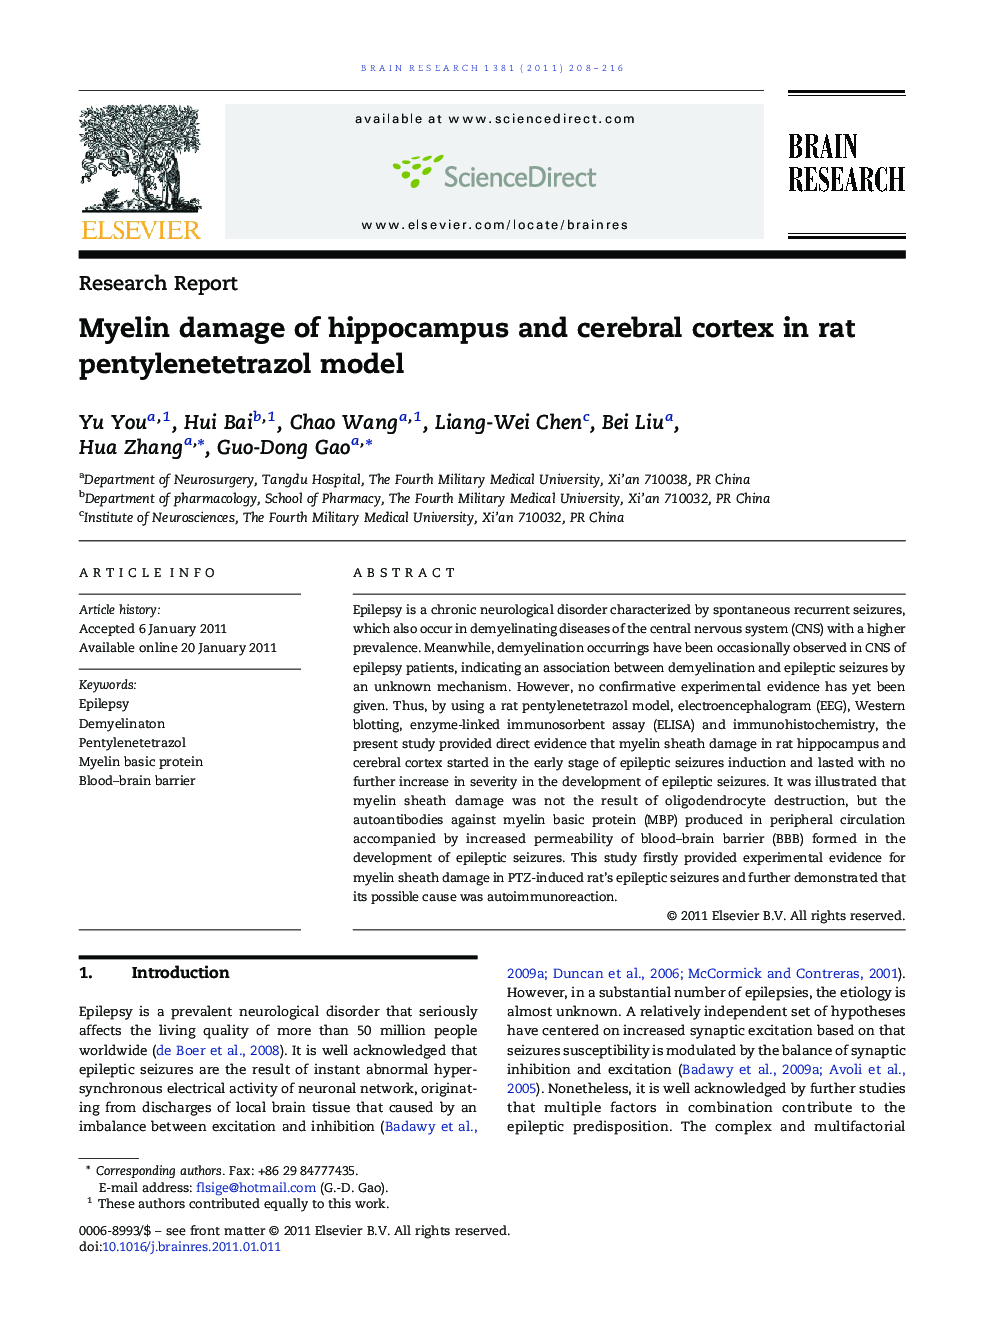 Research ReportMyelin damage of hippocampus and cerebral cortex in rat pentylenetetrazol model